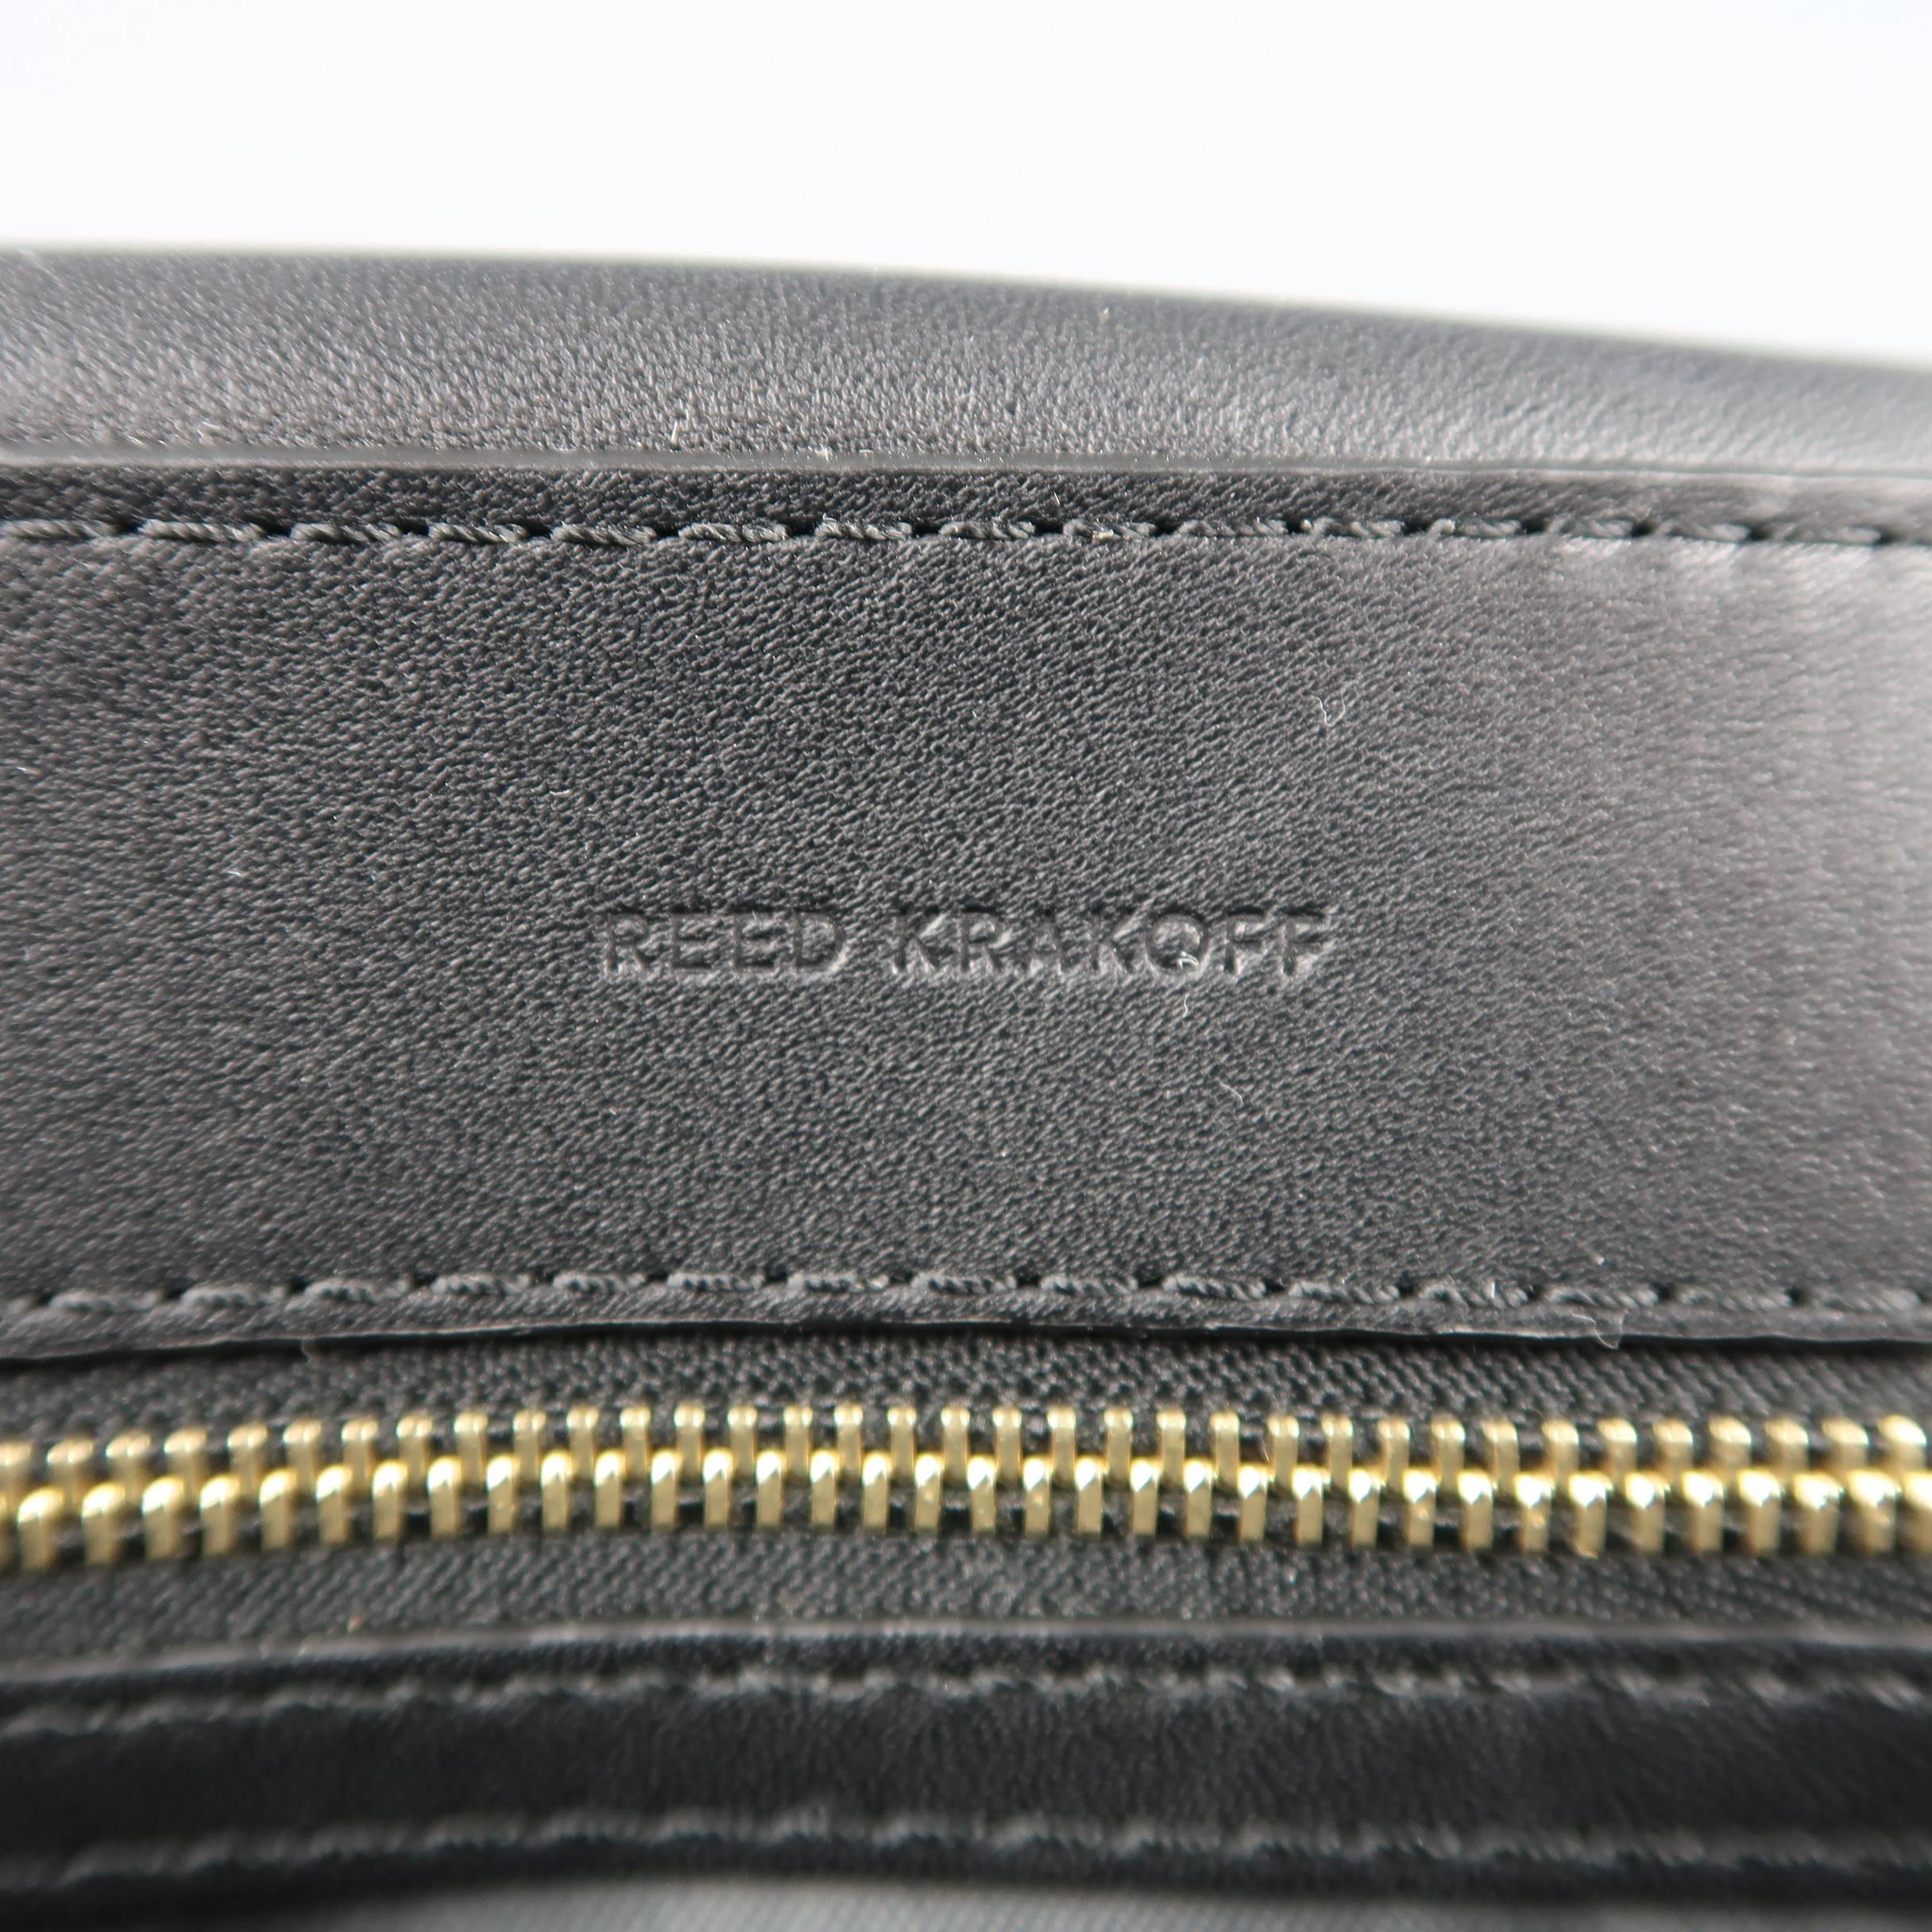 Reed Krakoff Black Leather Gold Brass Hardware Satchel Handbag 8